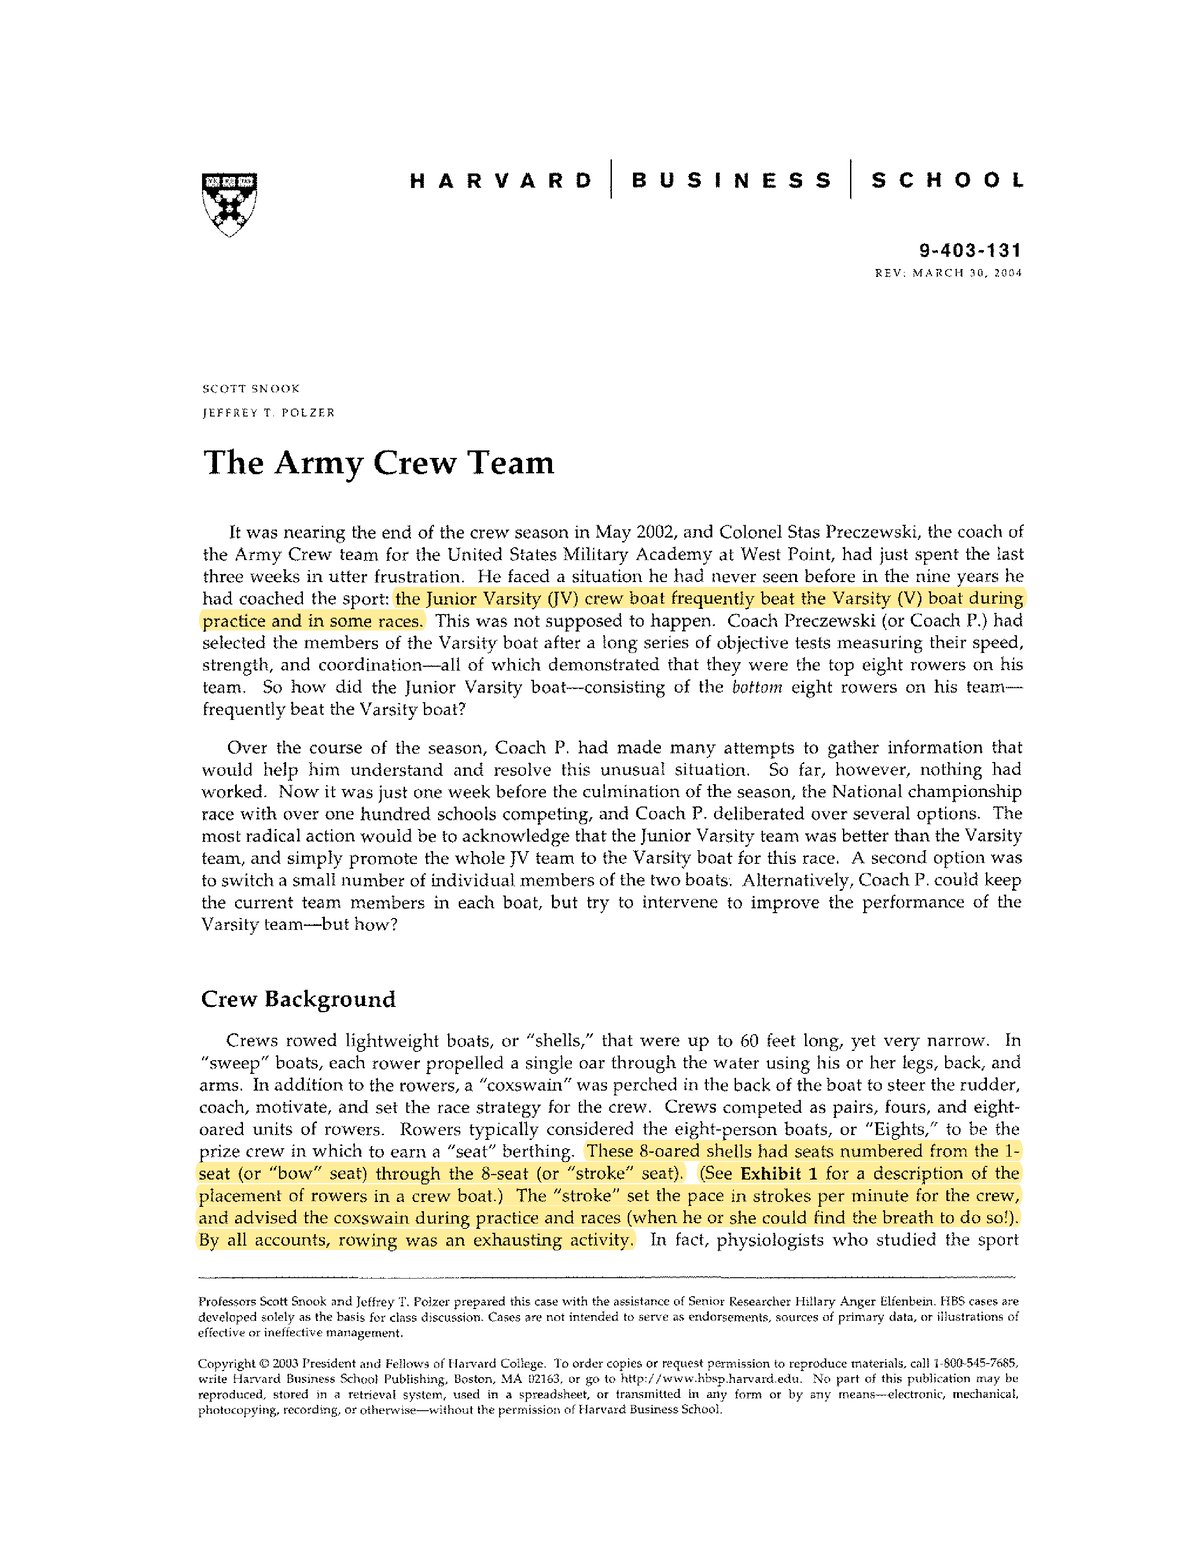 the army crew team case study harvard business school